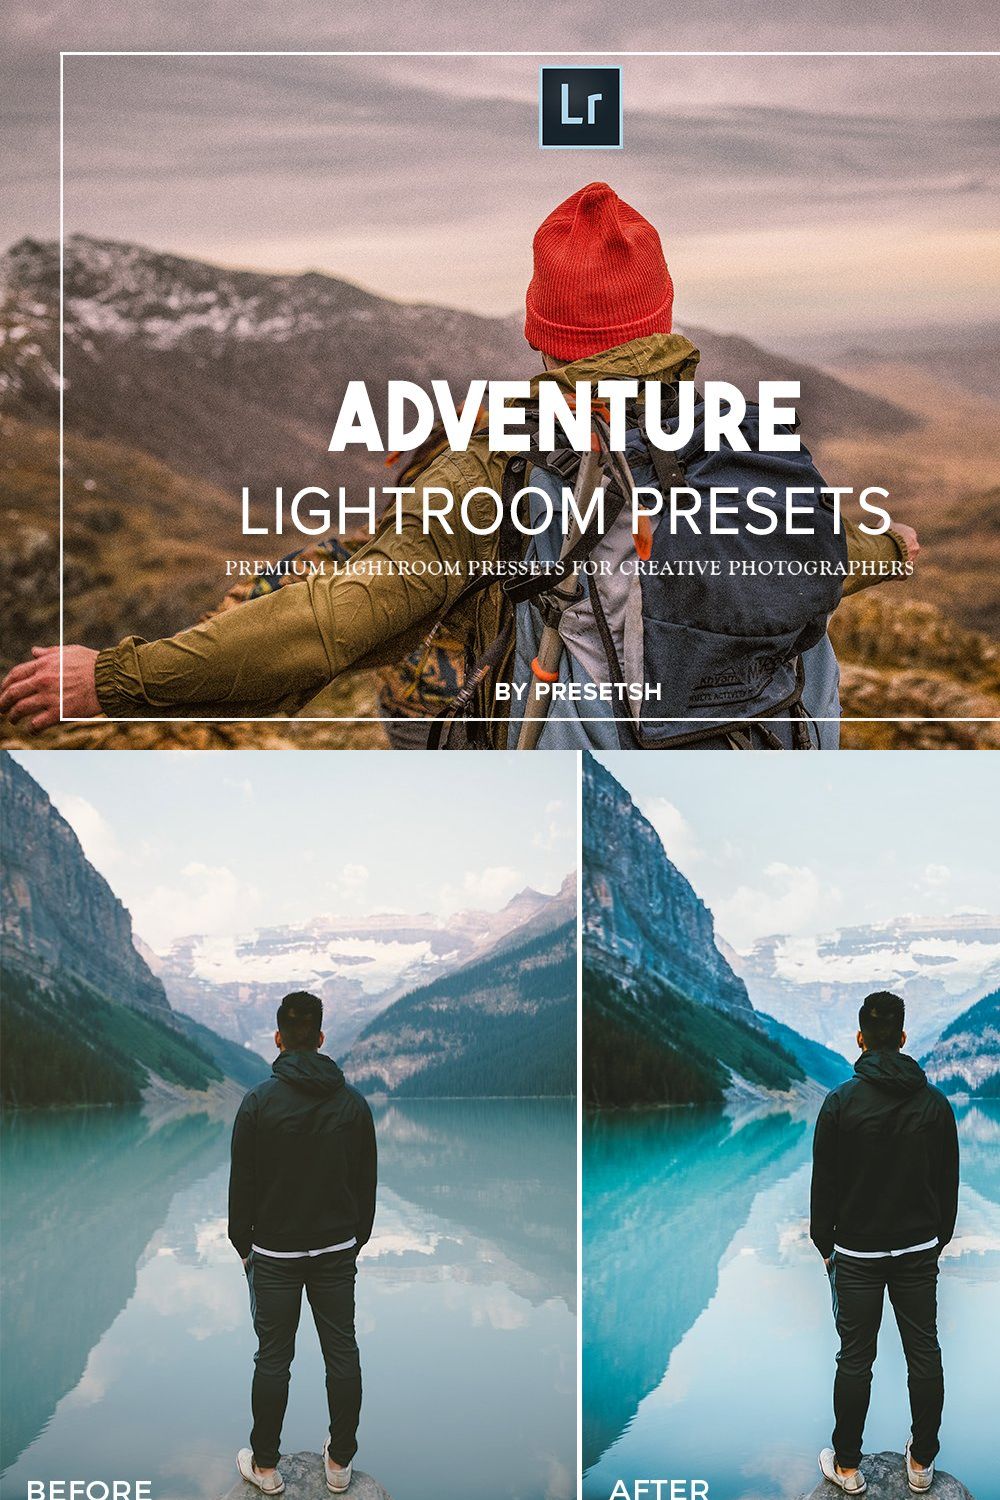 Adventure Lightroom Presets pinterest preview image.